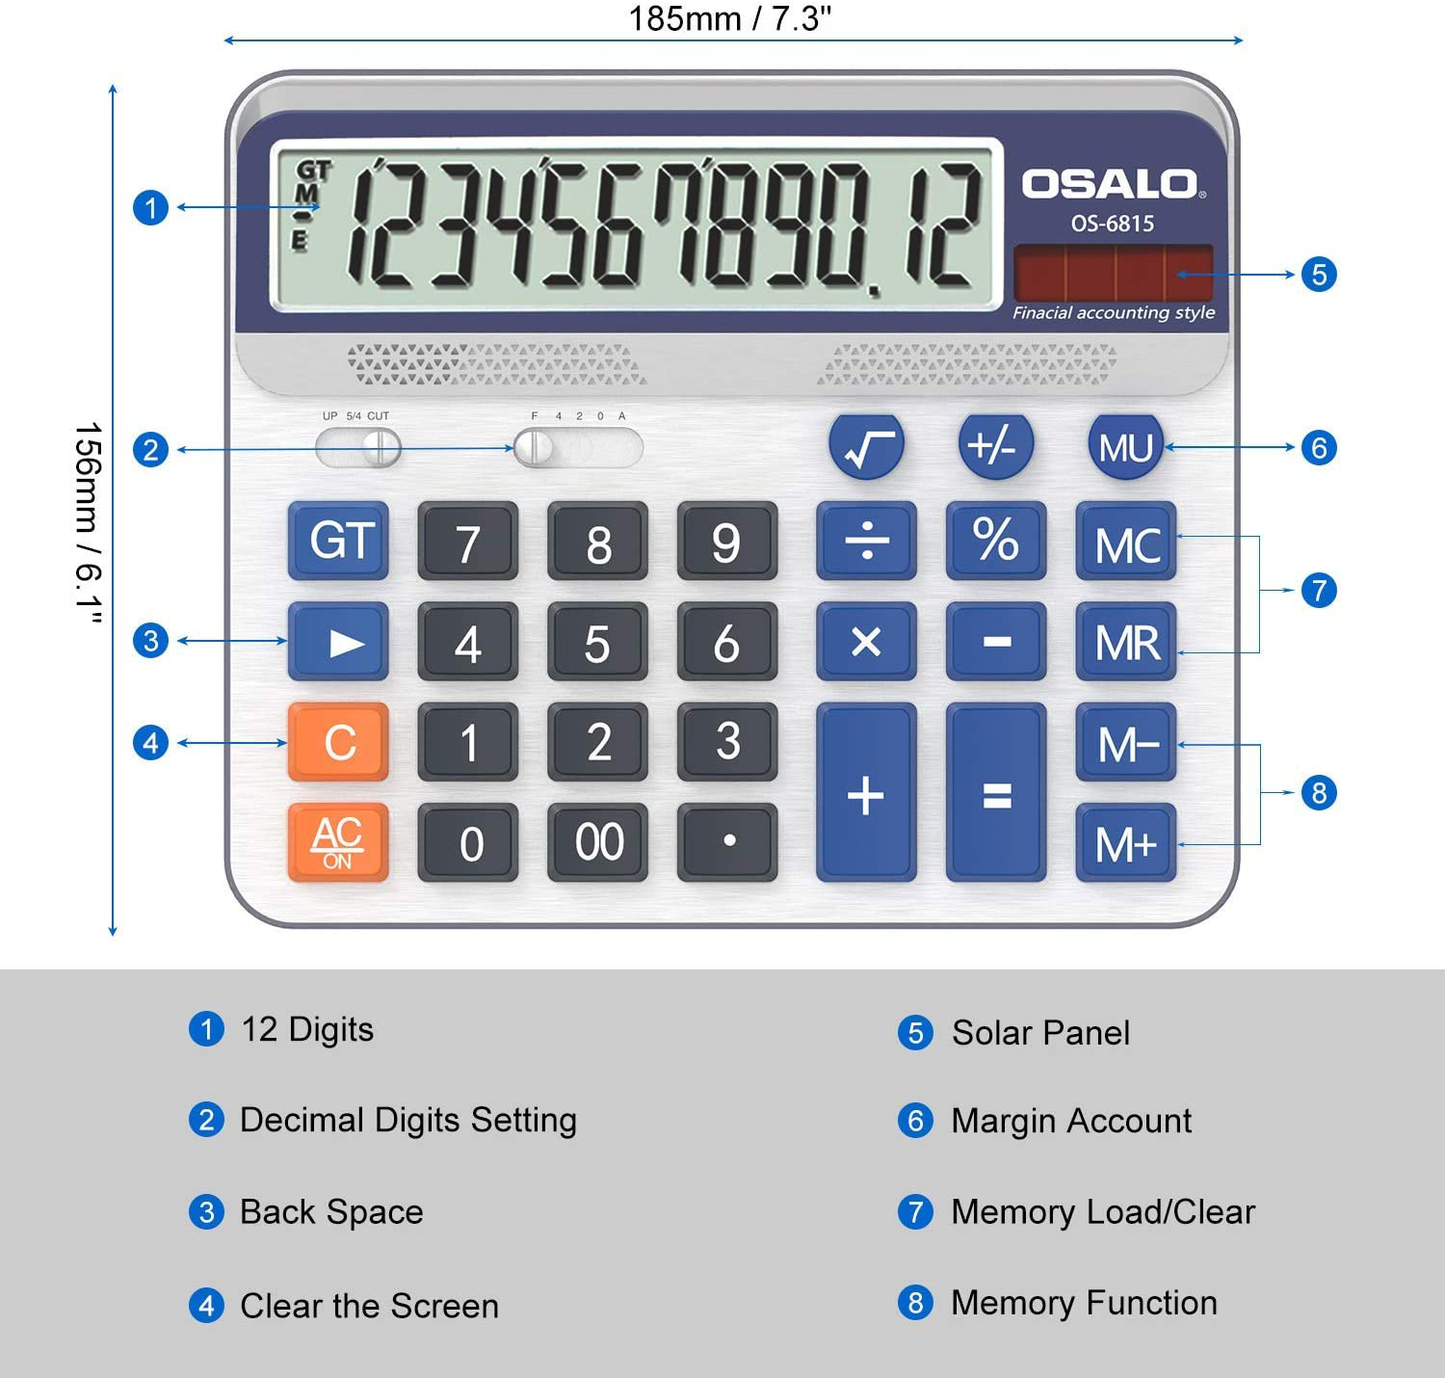 Pendancy Large LCD Display Button 12 Digits Desktop Calculator(OS-6815)